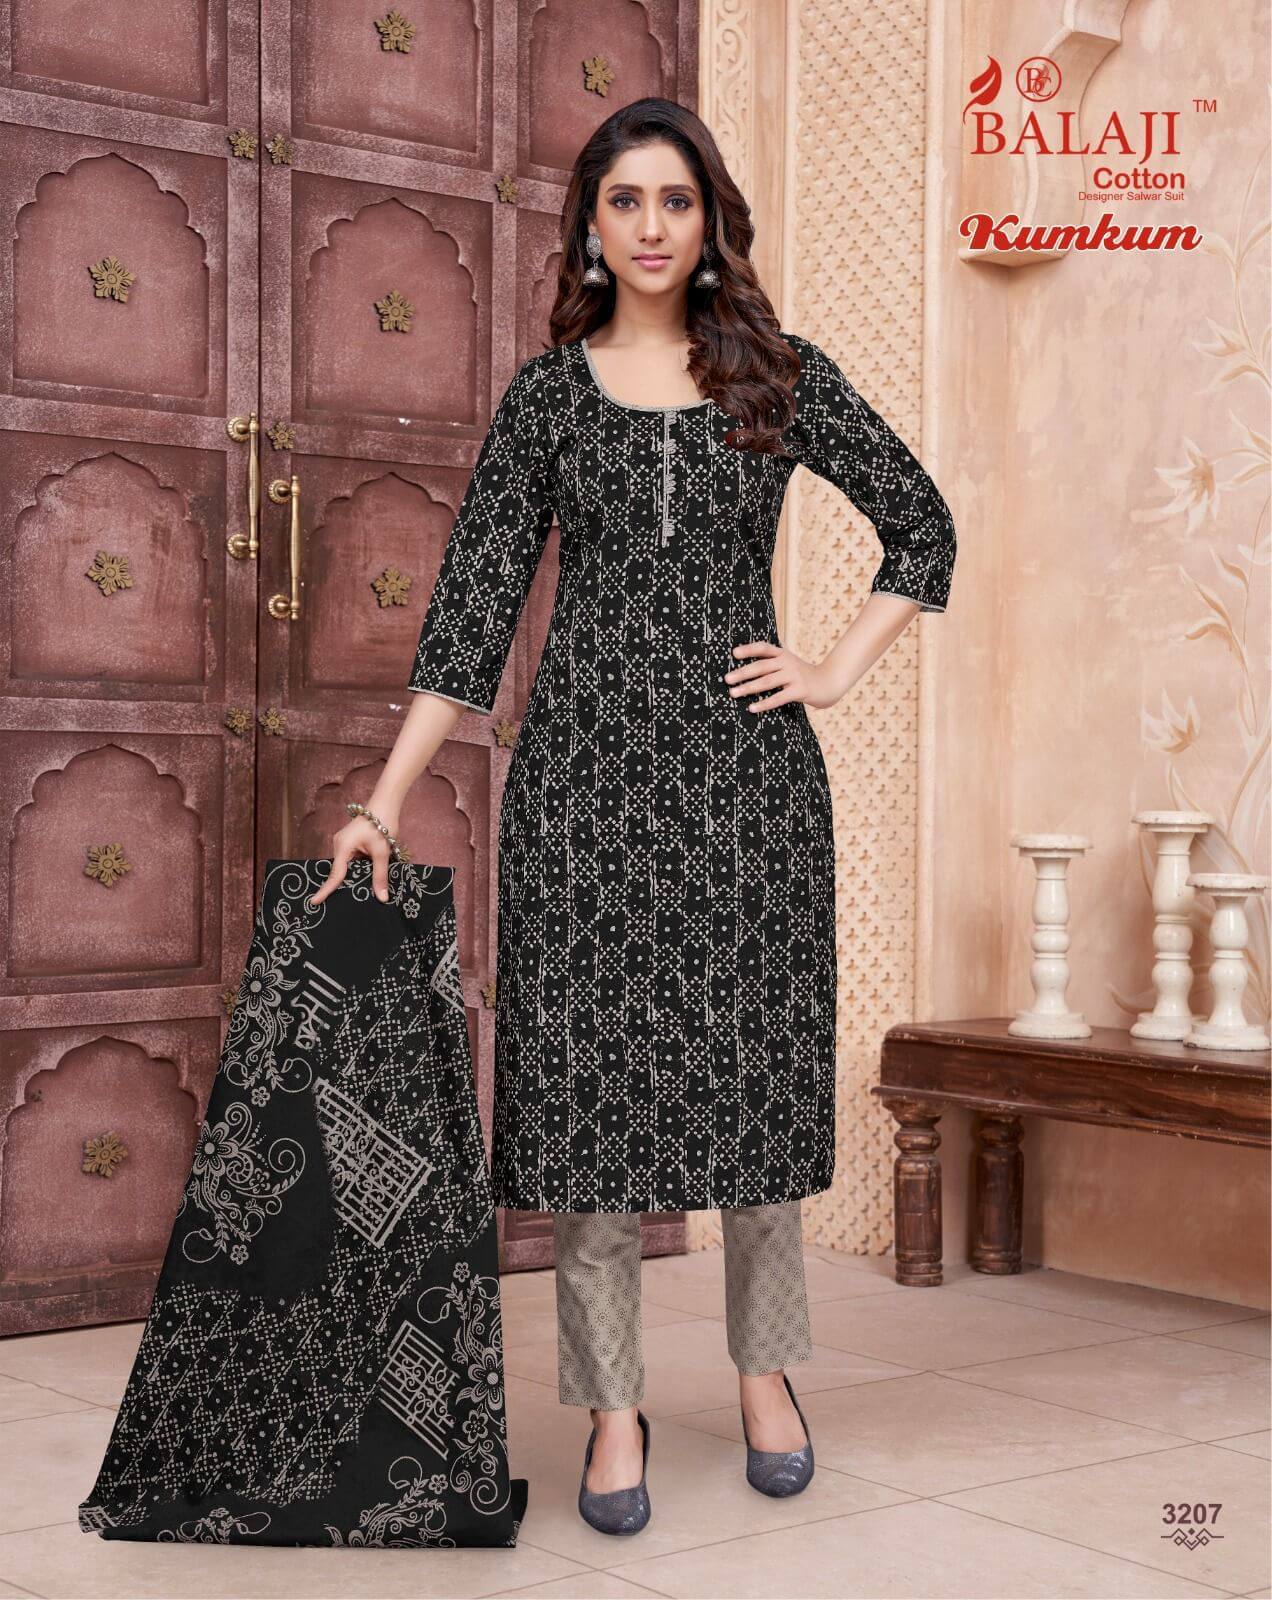 Balaji Cotton Kumkum Vol 32 A Readymade Dress collection 8